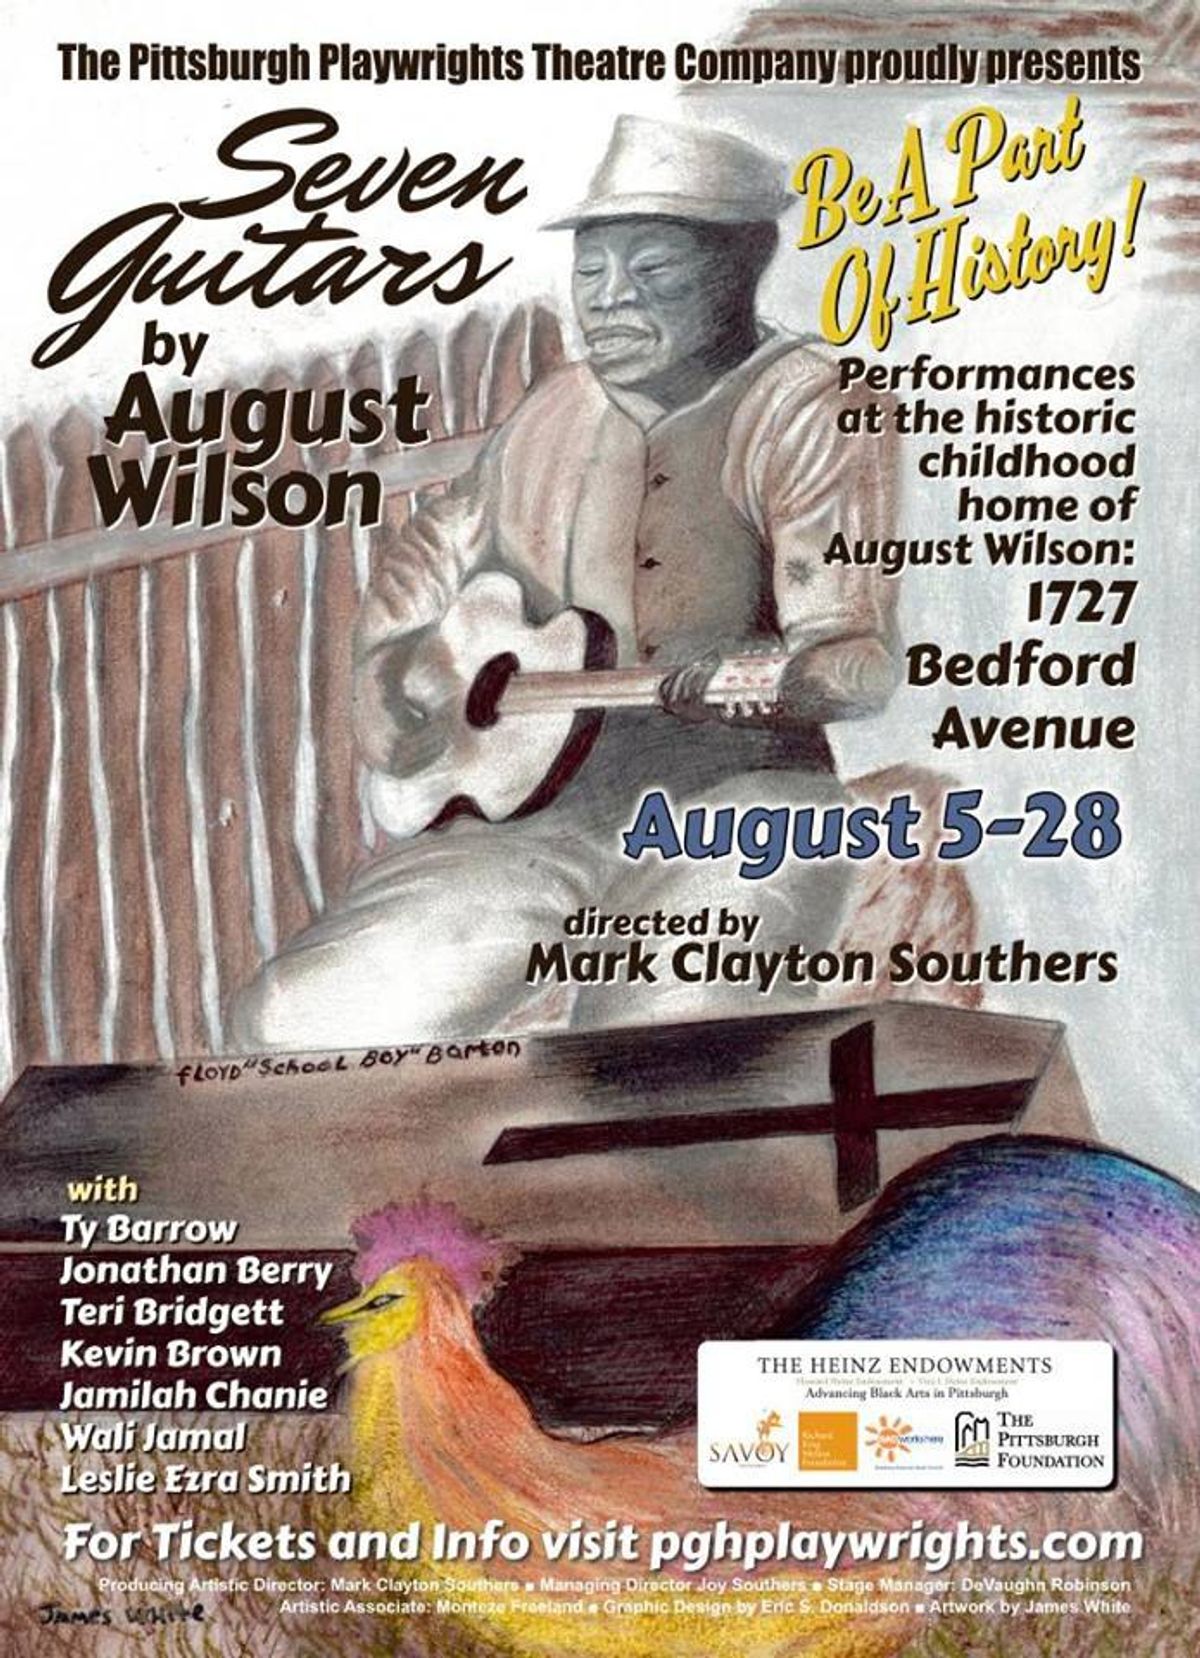 August Wilson's Seven Guitars Is Being Preformed In His Childhood Backyard